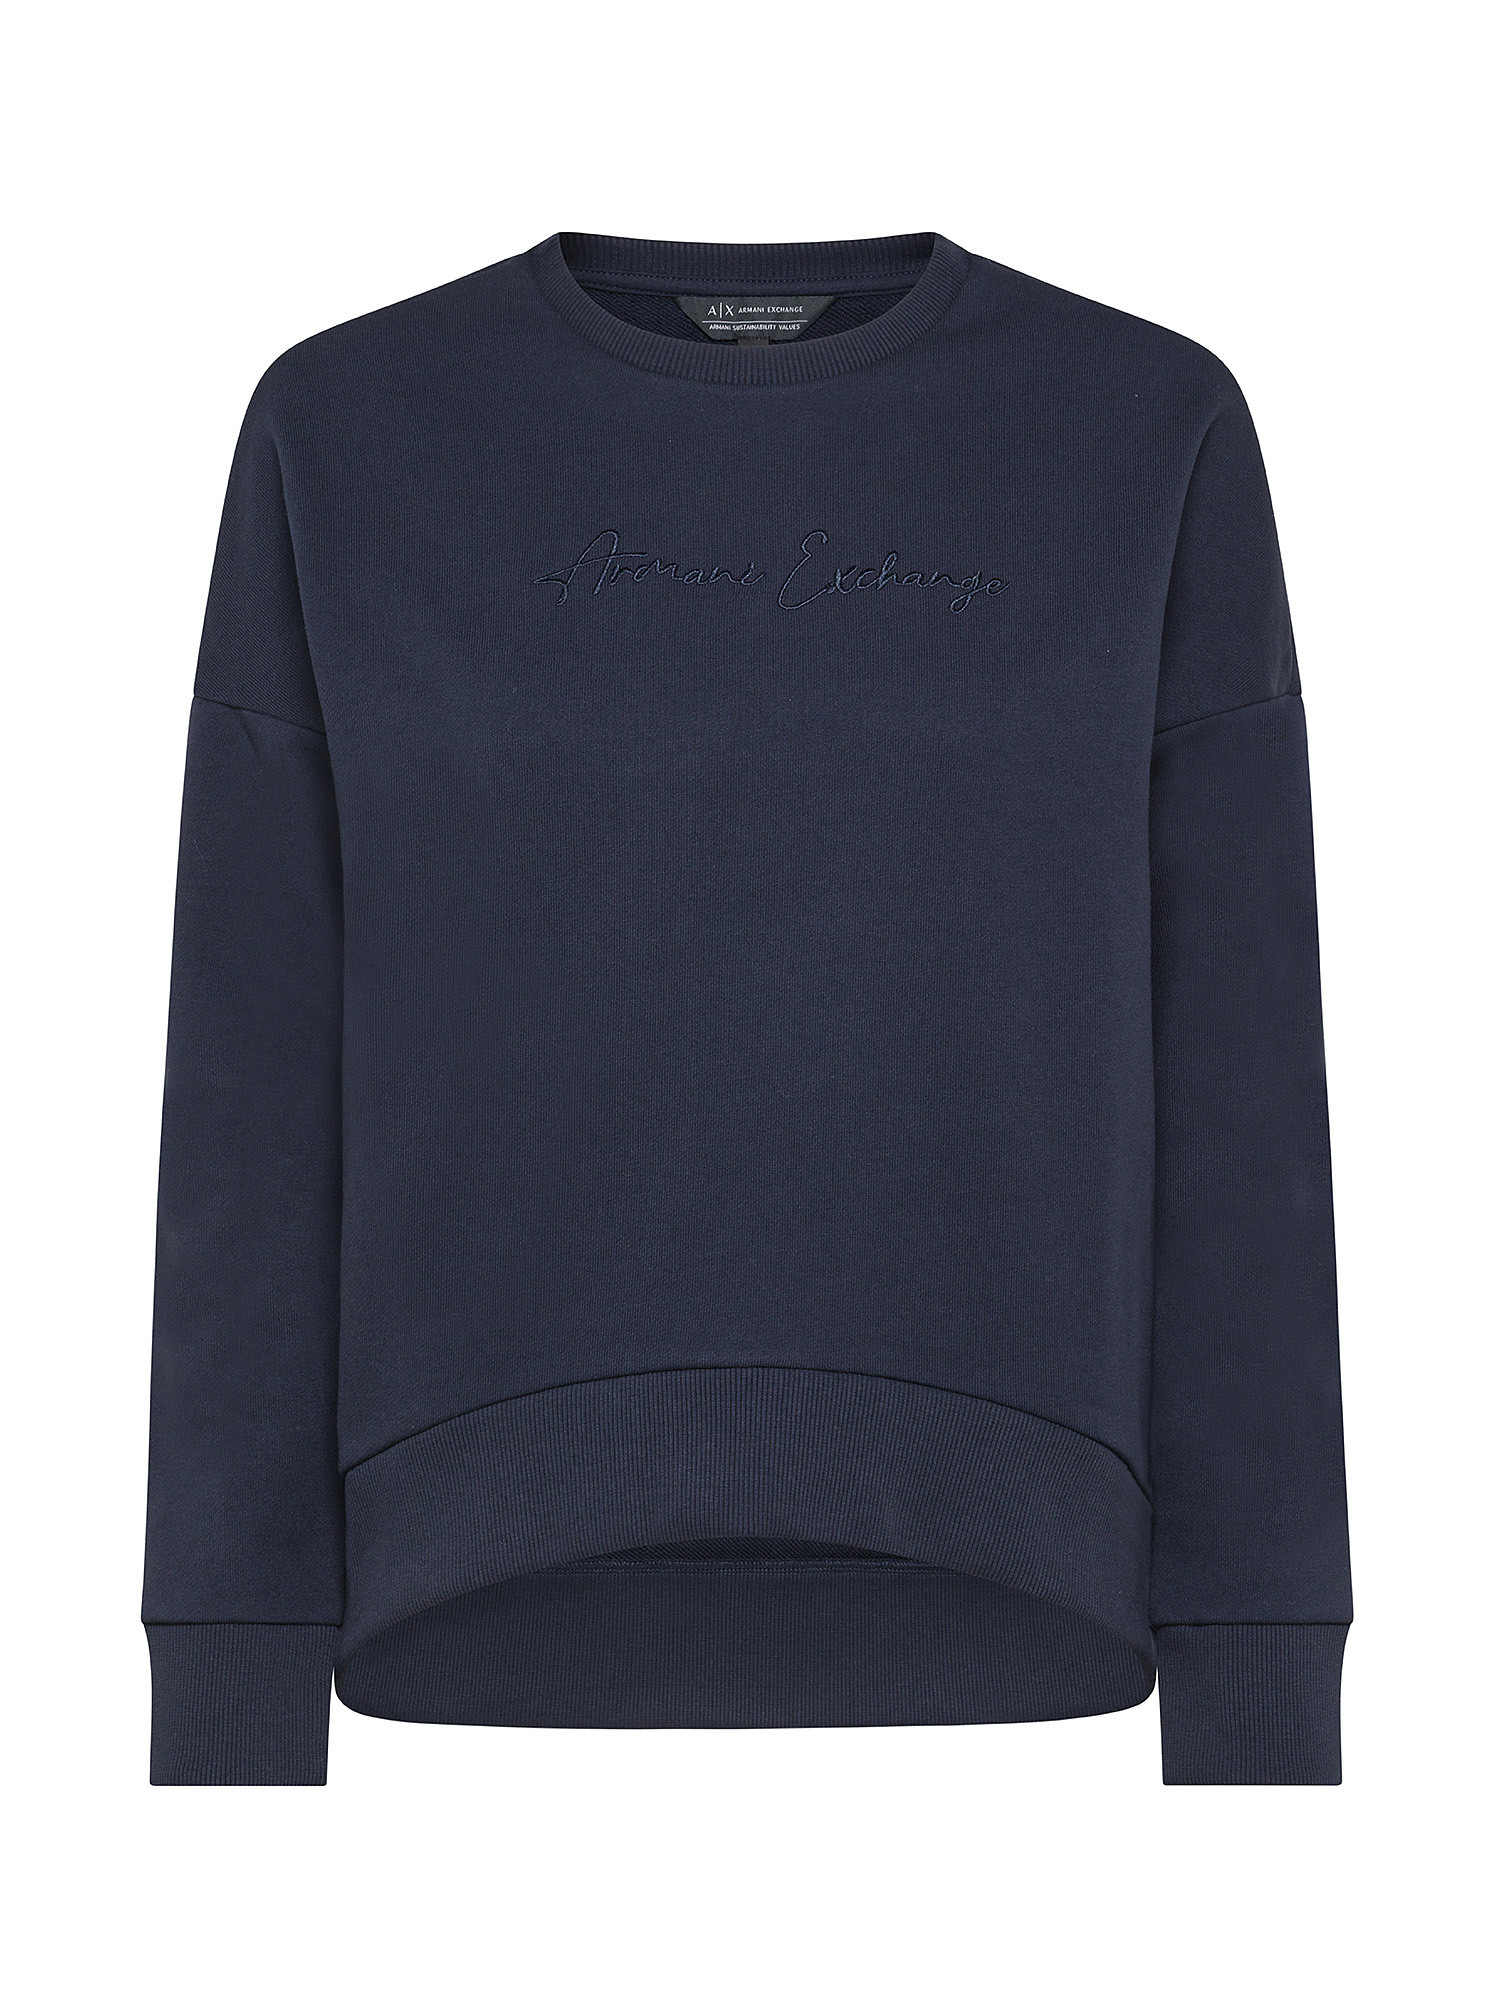 Armani Exchange - Sweatshirt with logo, Dark Blue, large image number 0